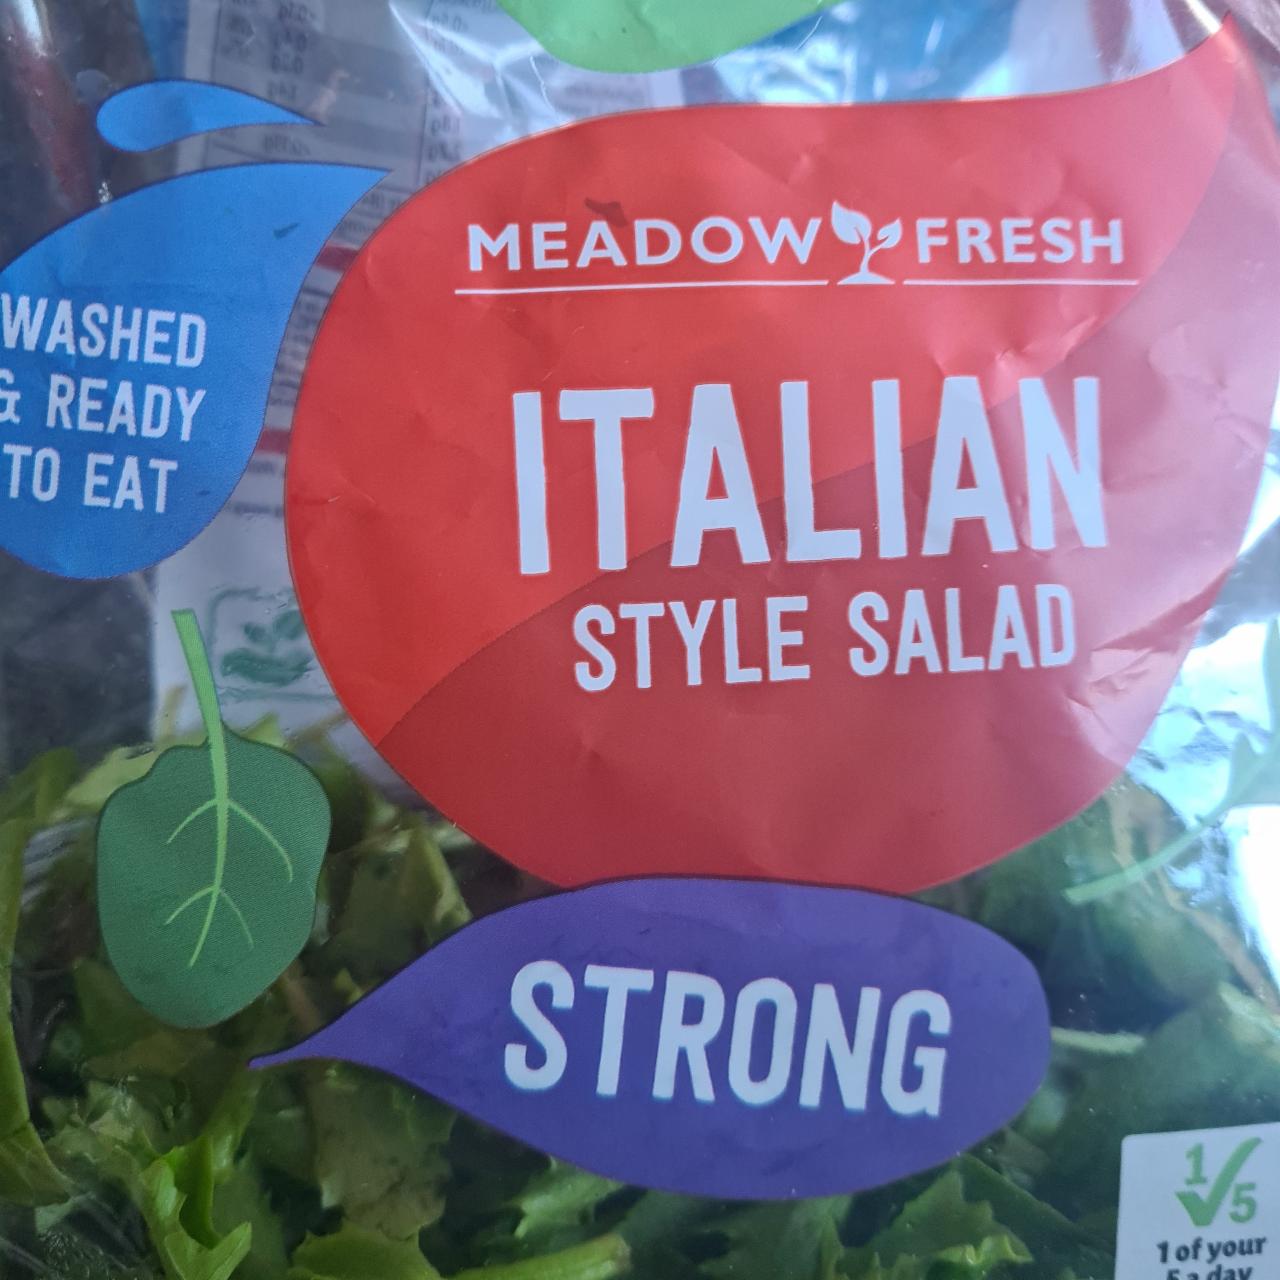 Fotografie - Italian style salad Meadow fresh